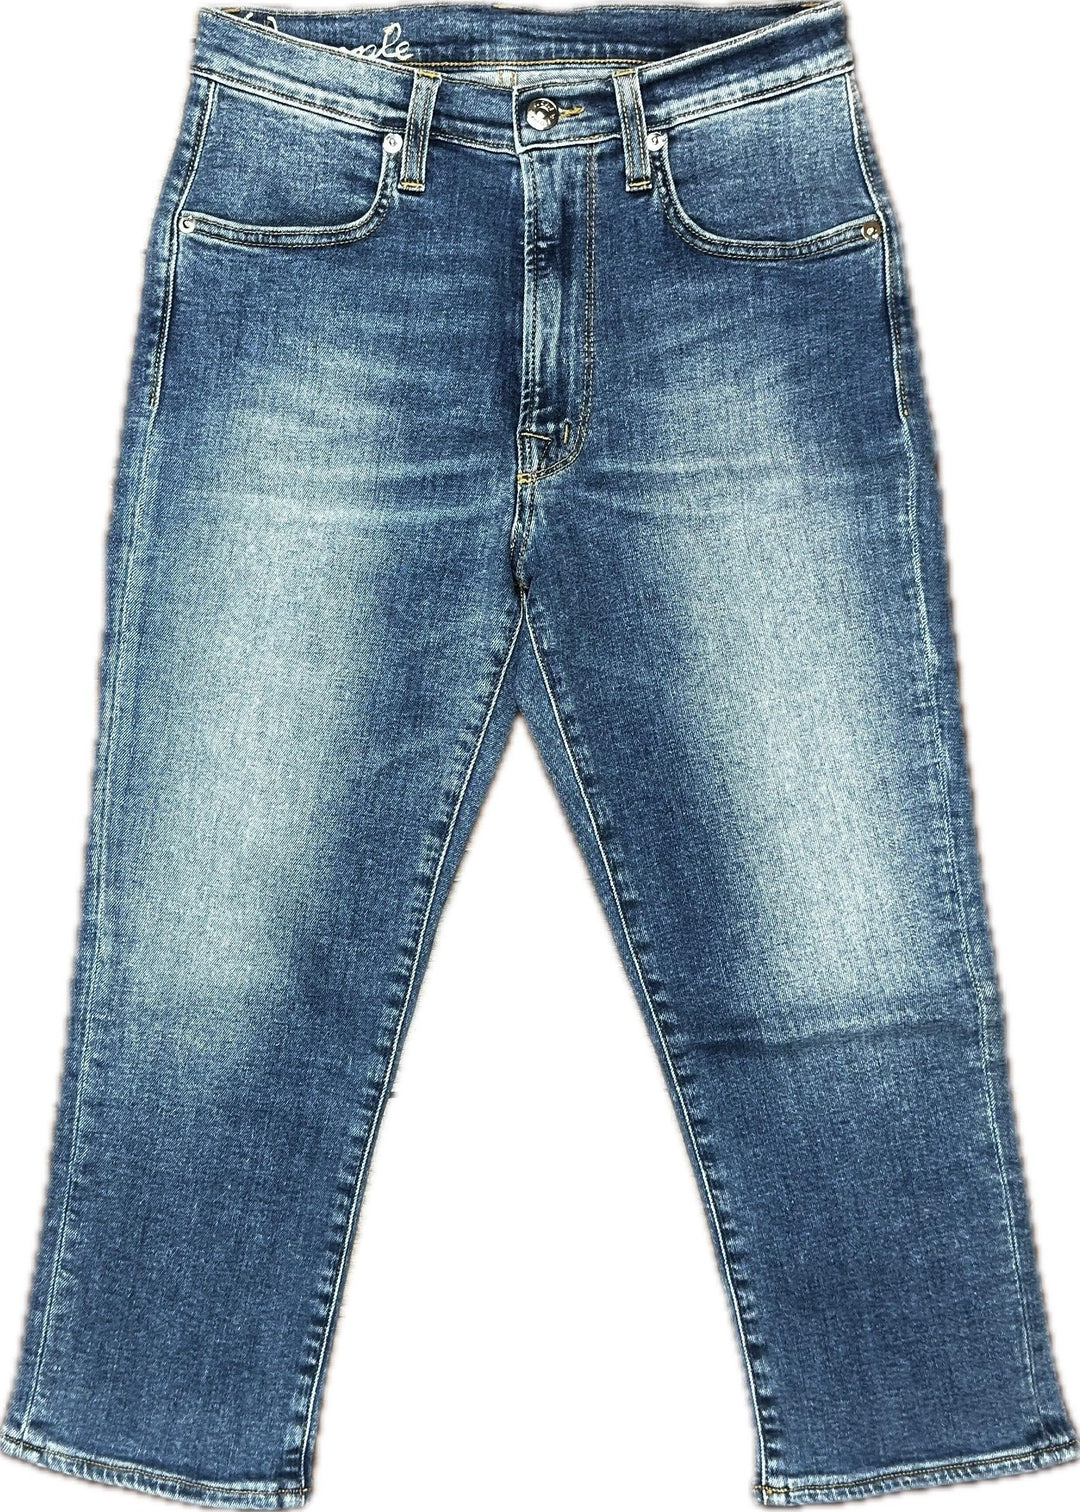 NEW - Ladies Italian (+) People Crop 'Jacqueline' Jeans - Size 28 - Jean Pool